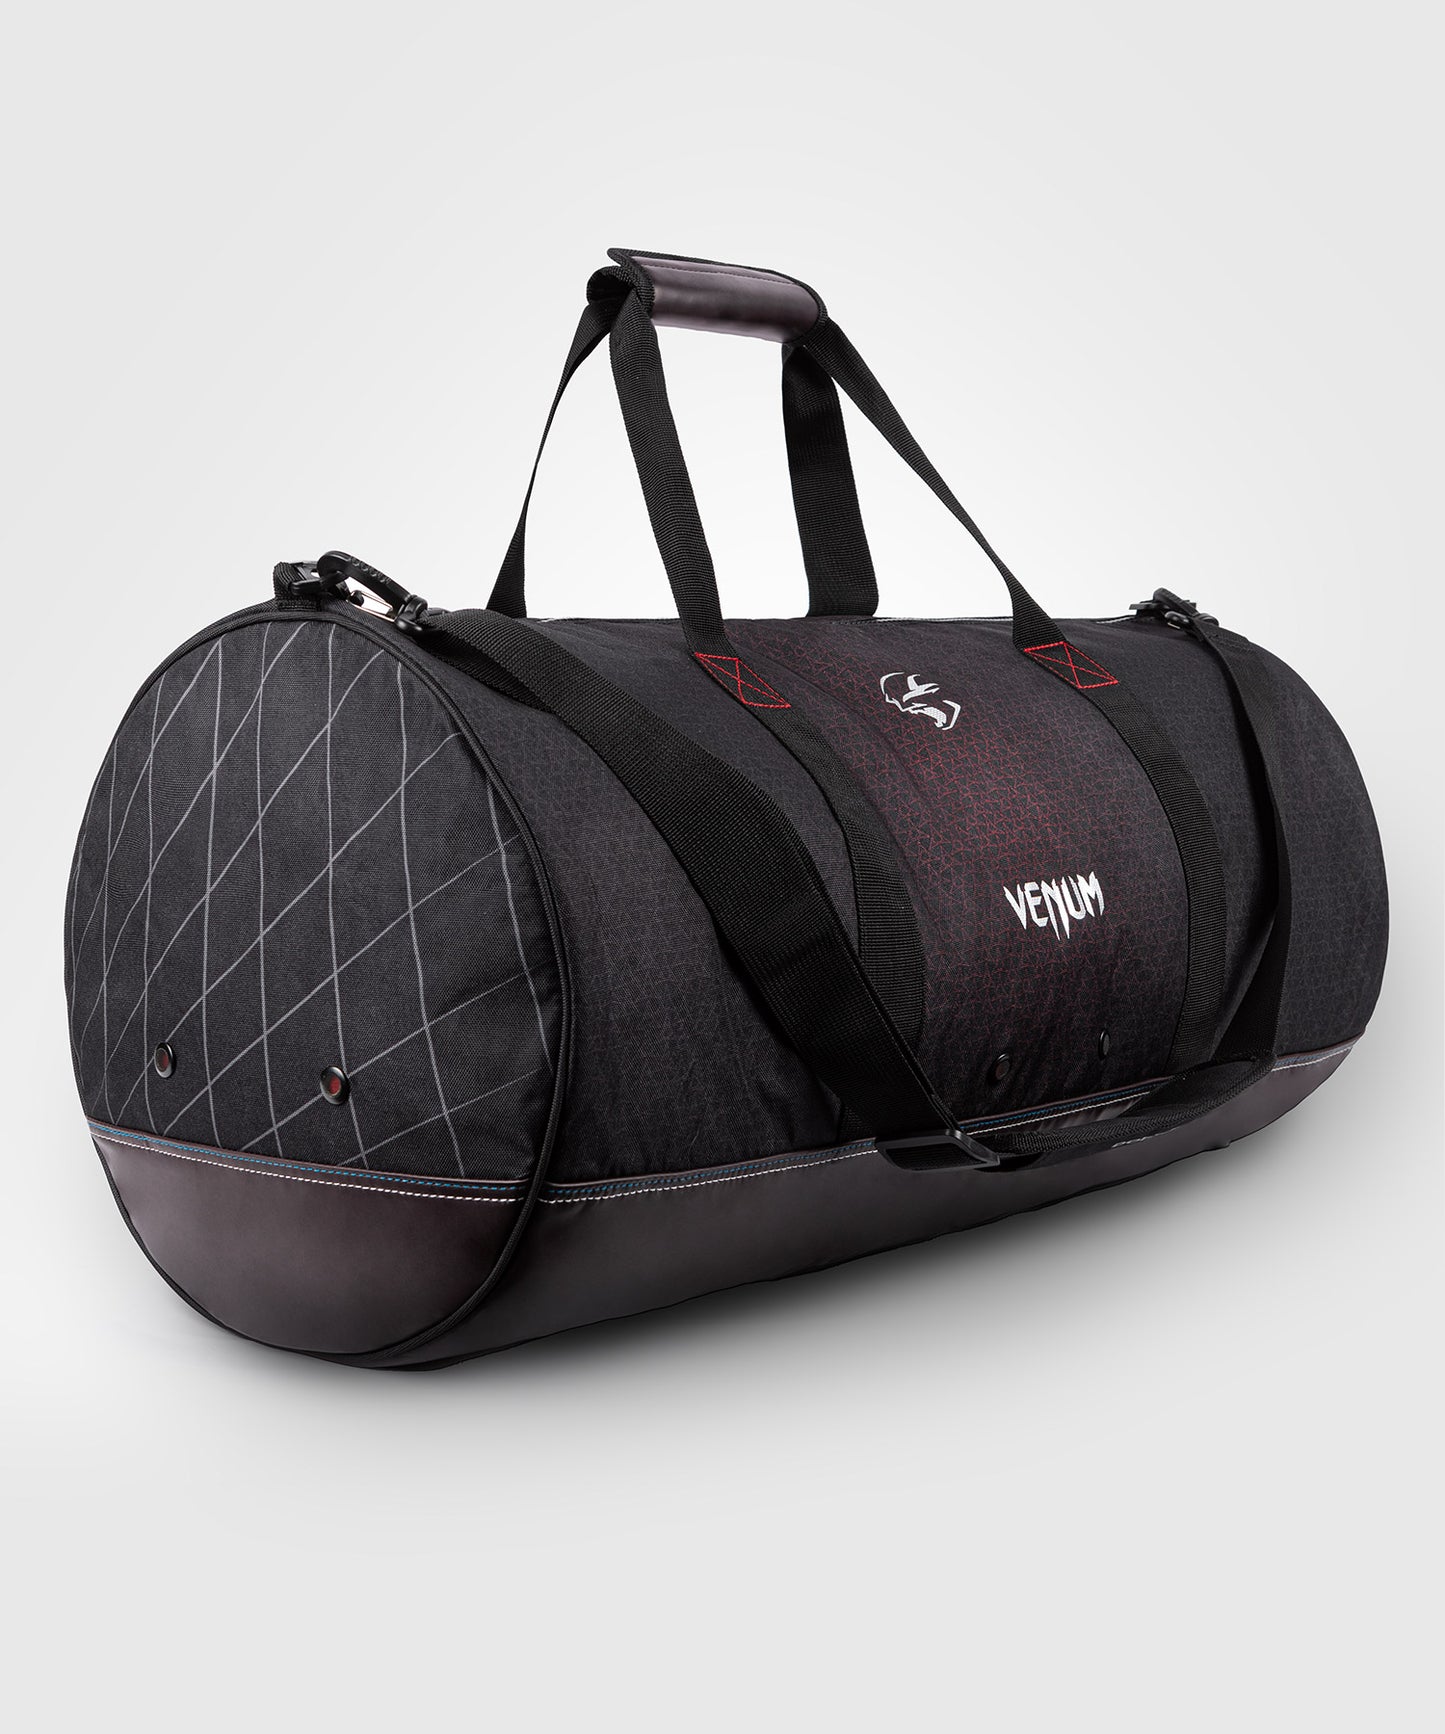 Venum x Dodge Banshee Sports Bag - Black